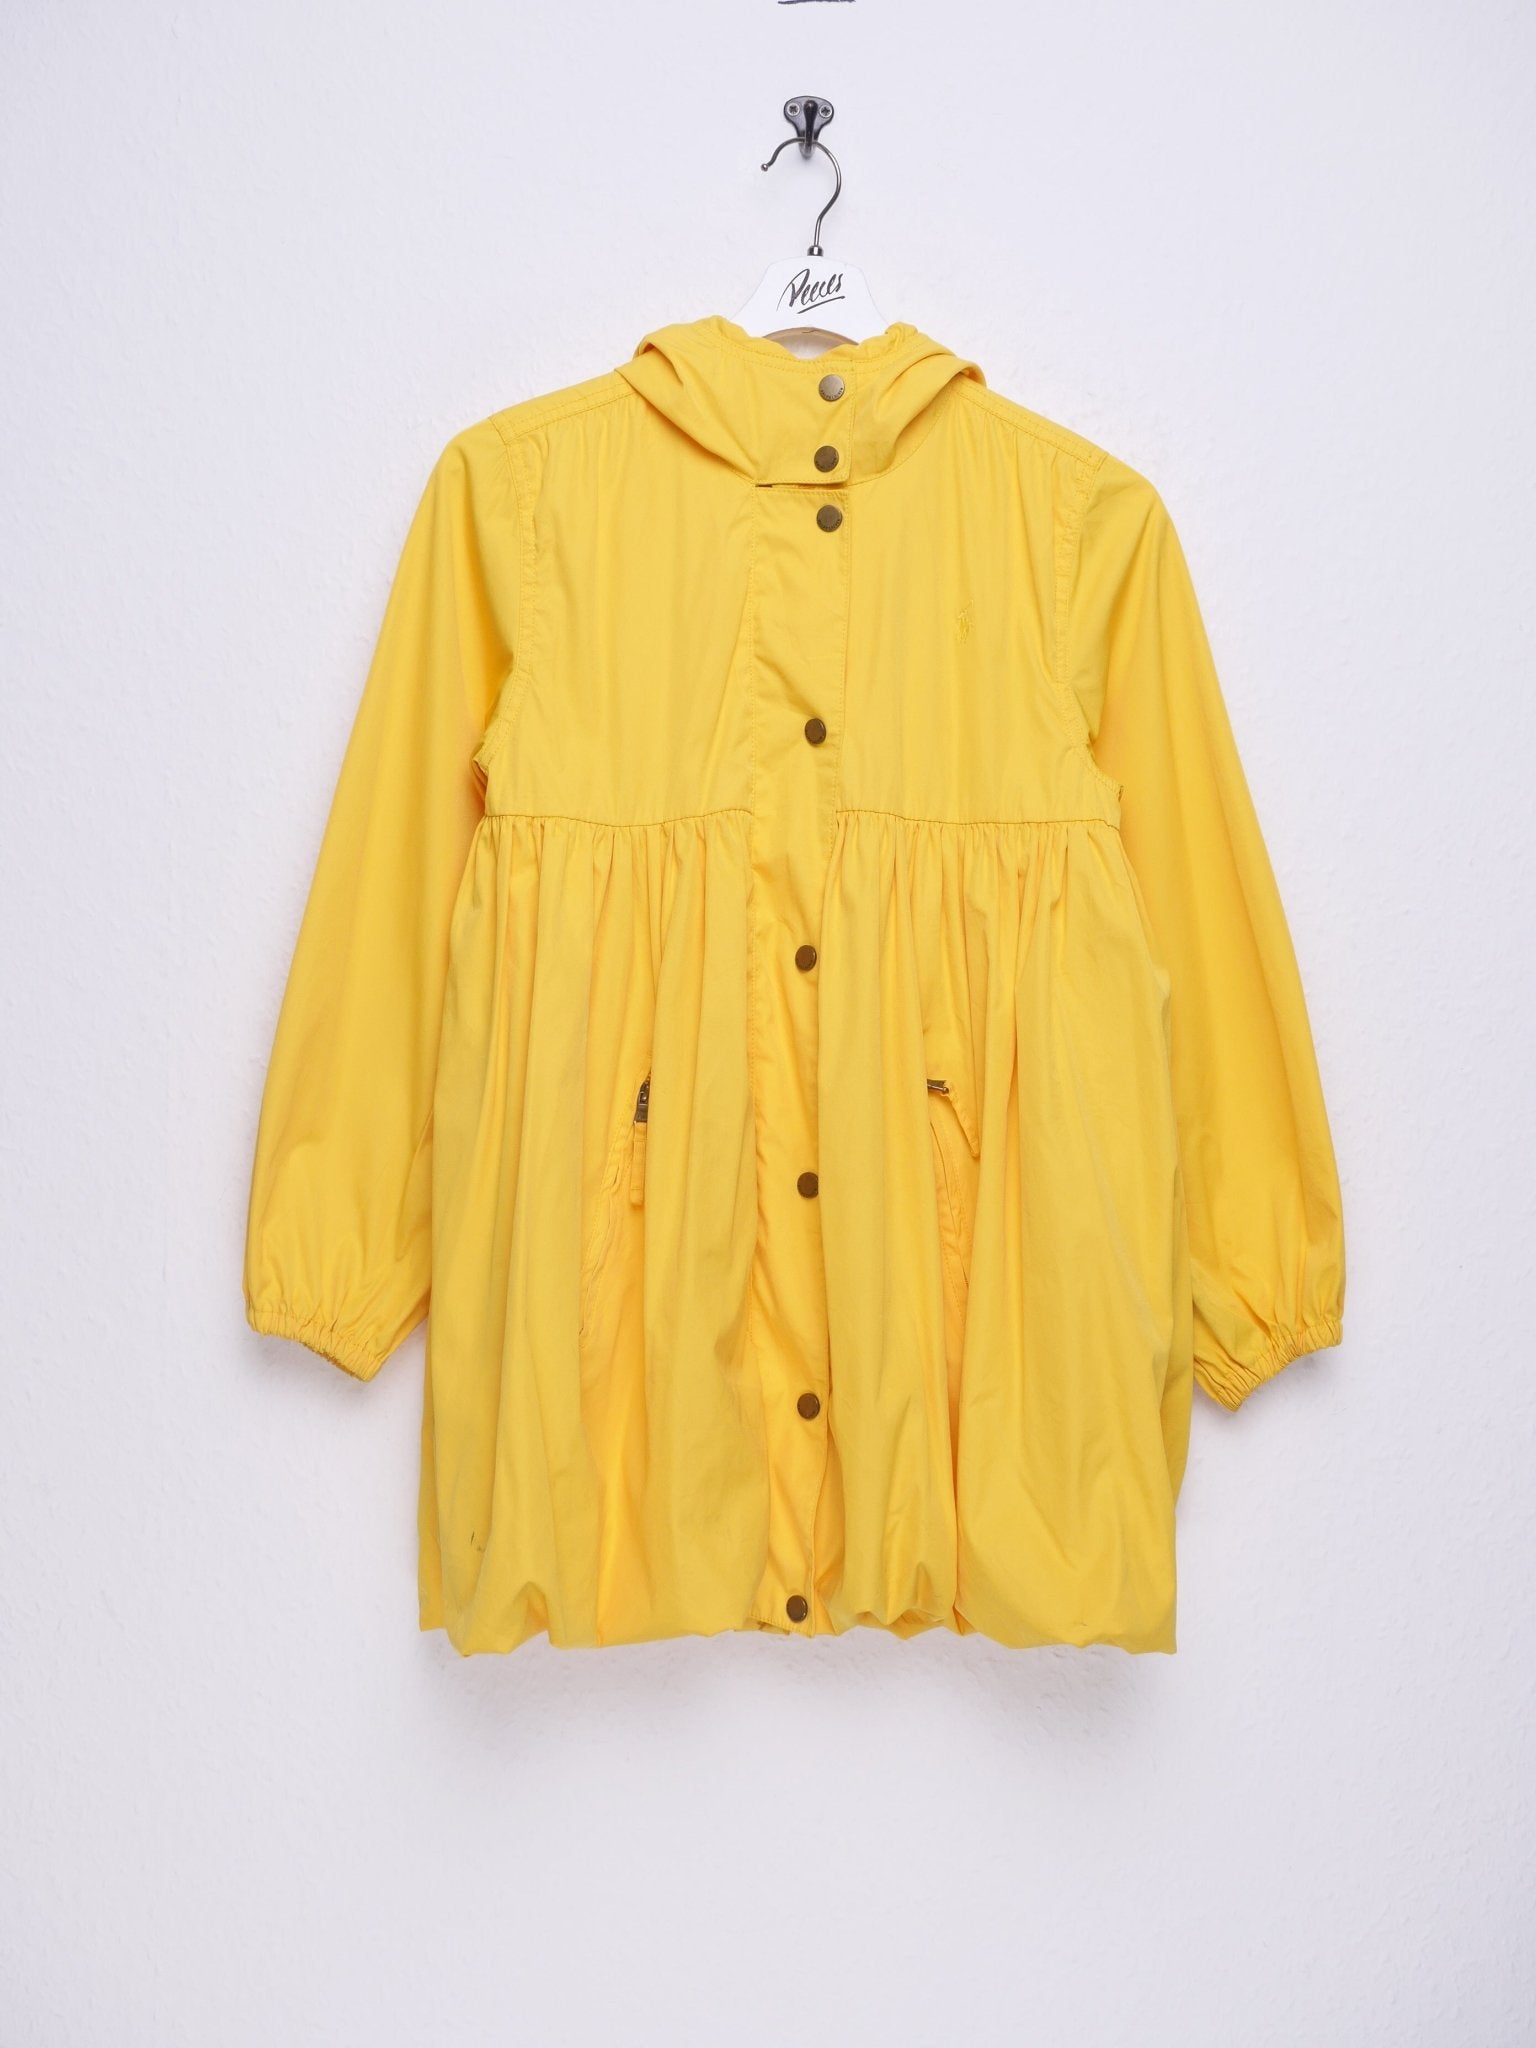 Polo Ralph Lauren embroidered Logo yellow Anorak Jacke - Peeces